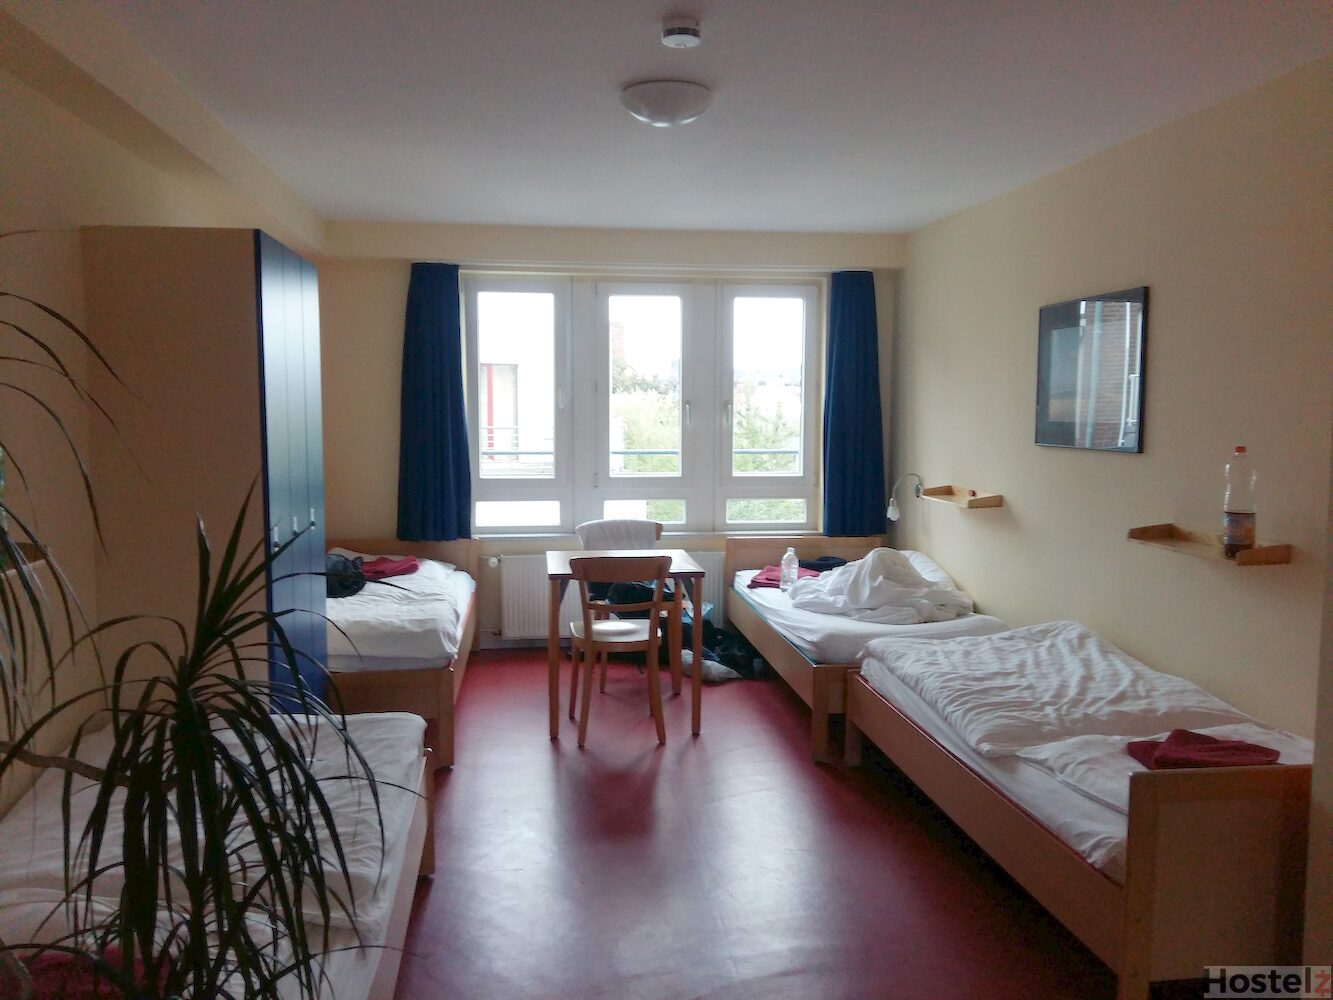 Hotel Schanzenstern - Altona, Hamburg